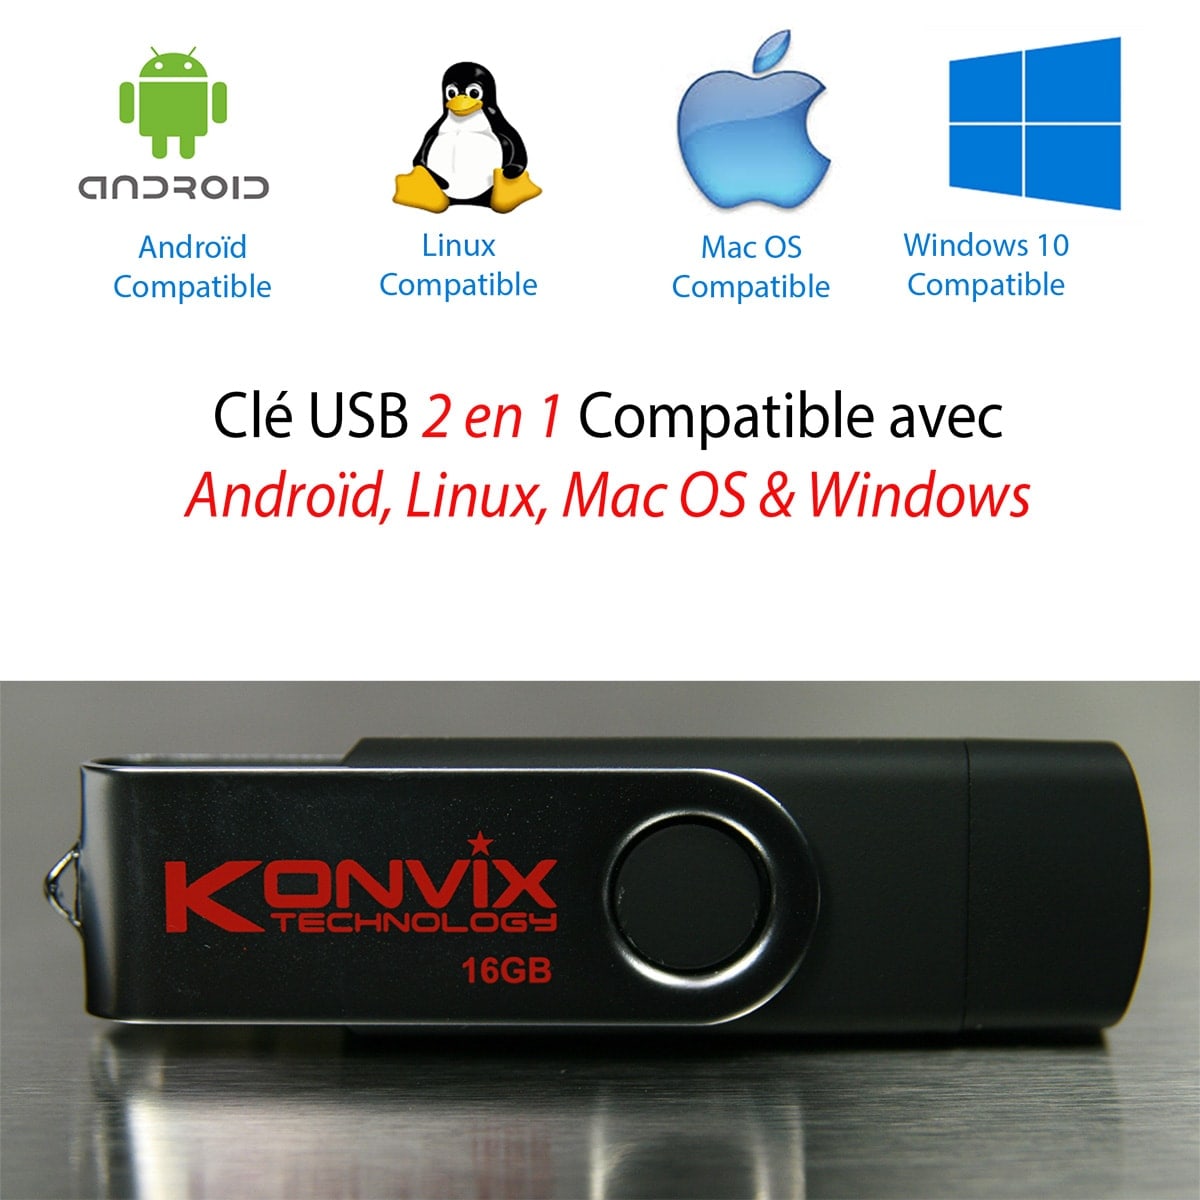 Clé USB OTG DUO-LINK 16GB pour Androïd, Windows, Linux, Mac os.